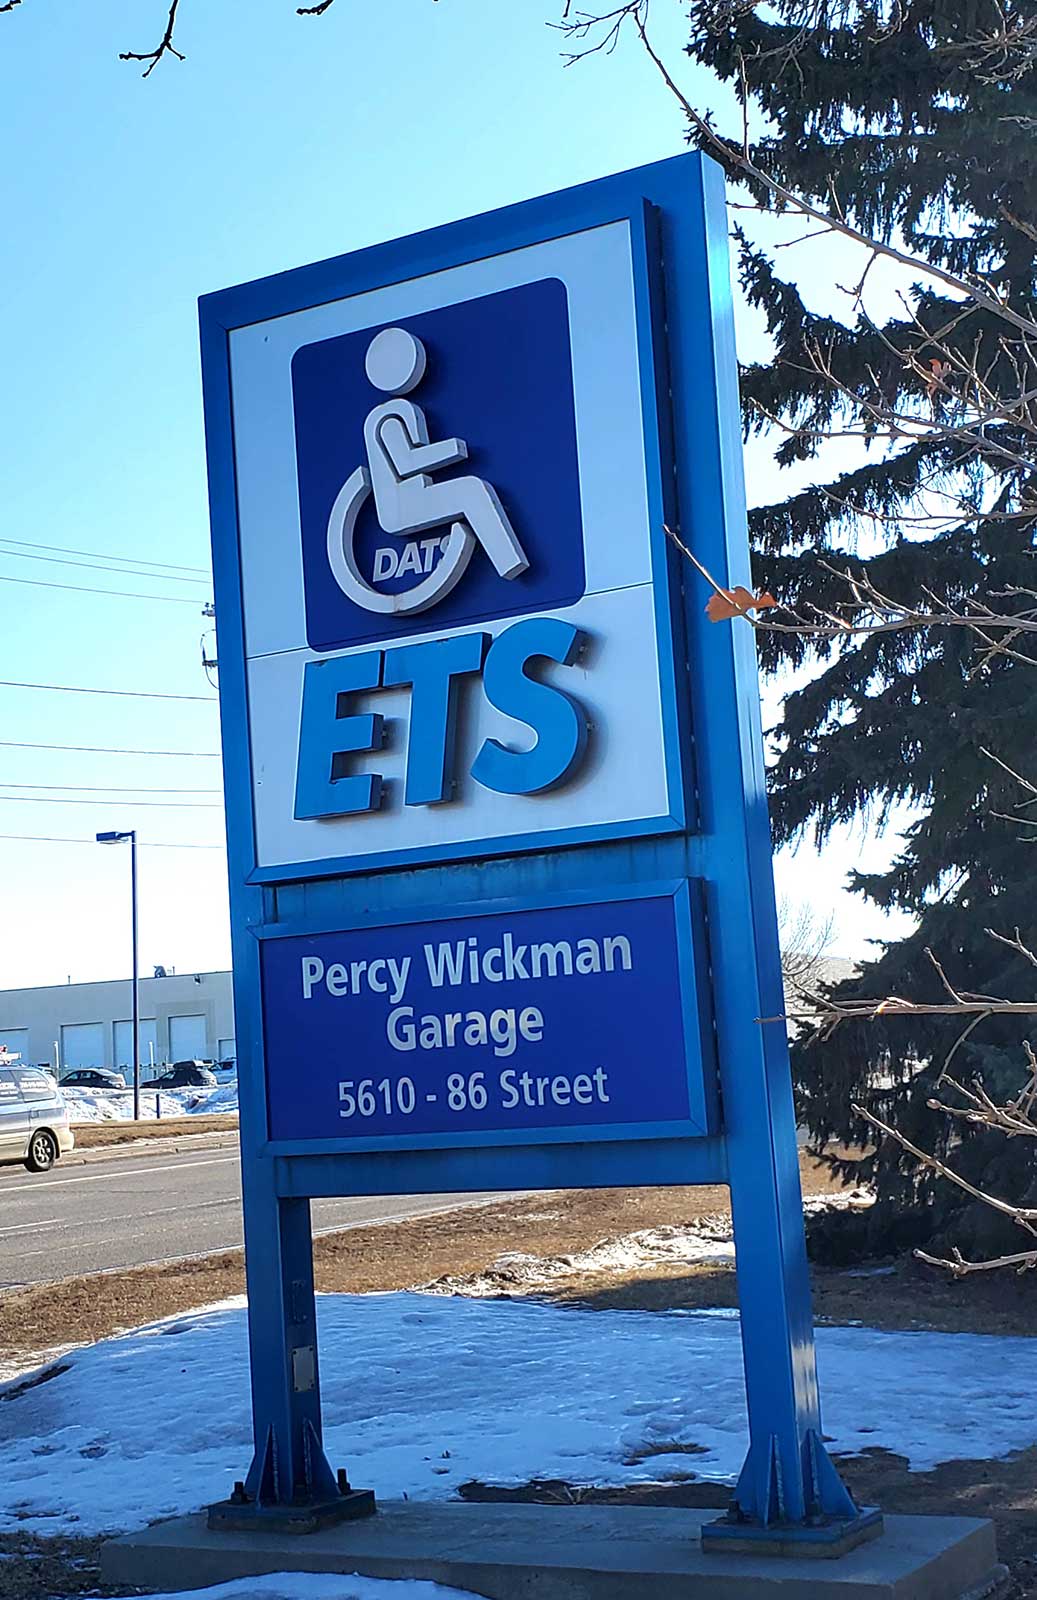 Percy Wickman DATS garage at 5610 86 Street, Edmonton